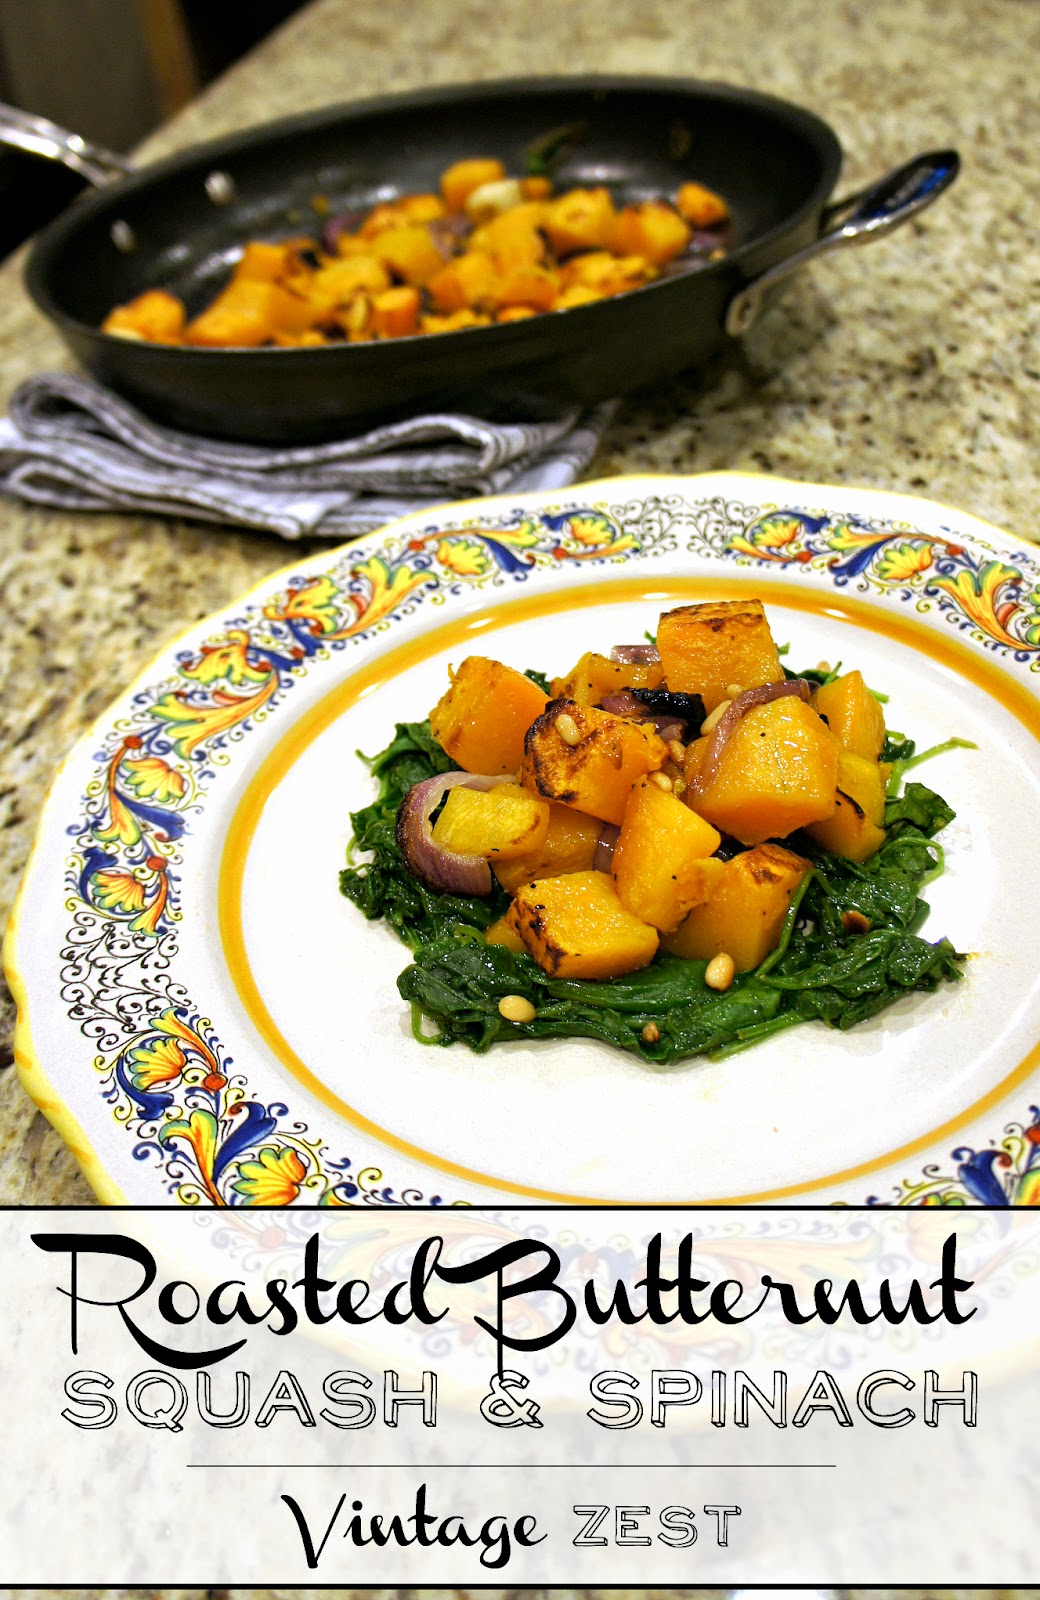 Roasted Butternut Squash & Spinach on Diane's Vintage Zest!  #recipe #healthy #vegetarian #vegan